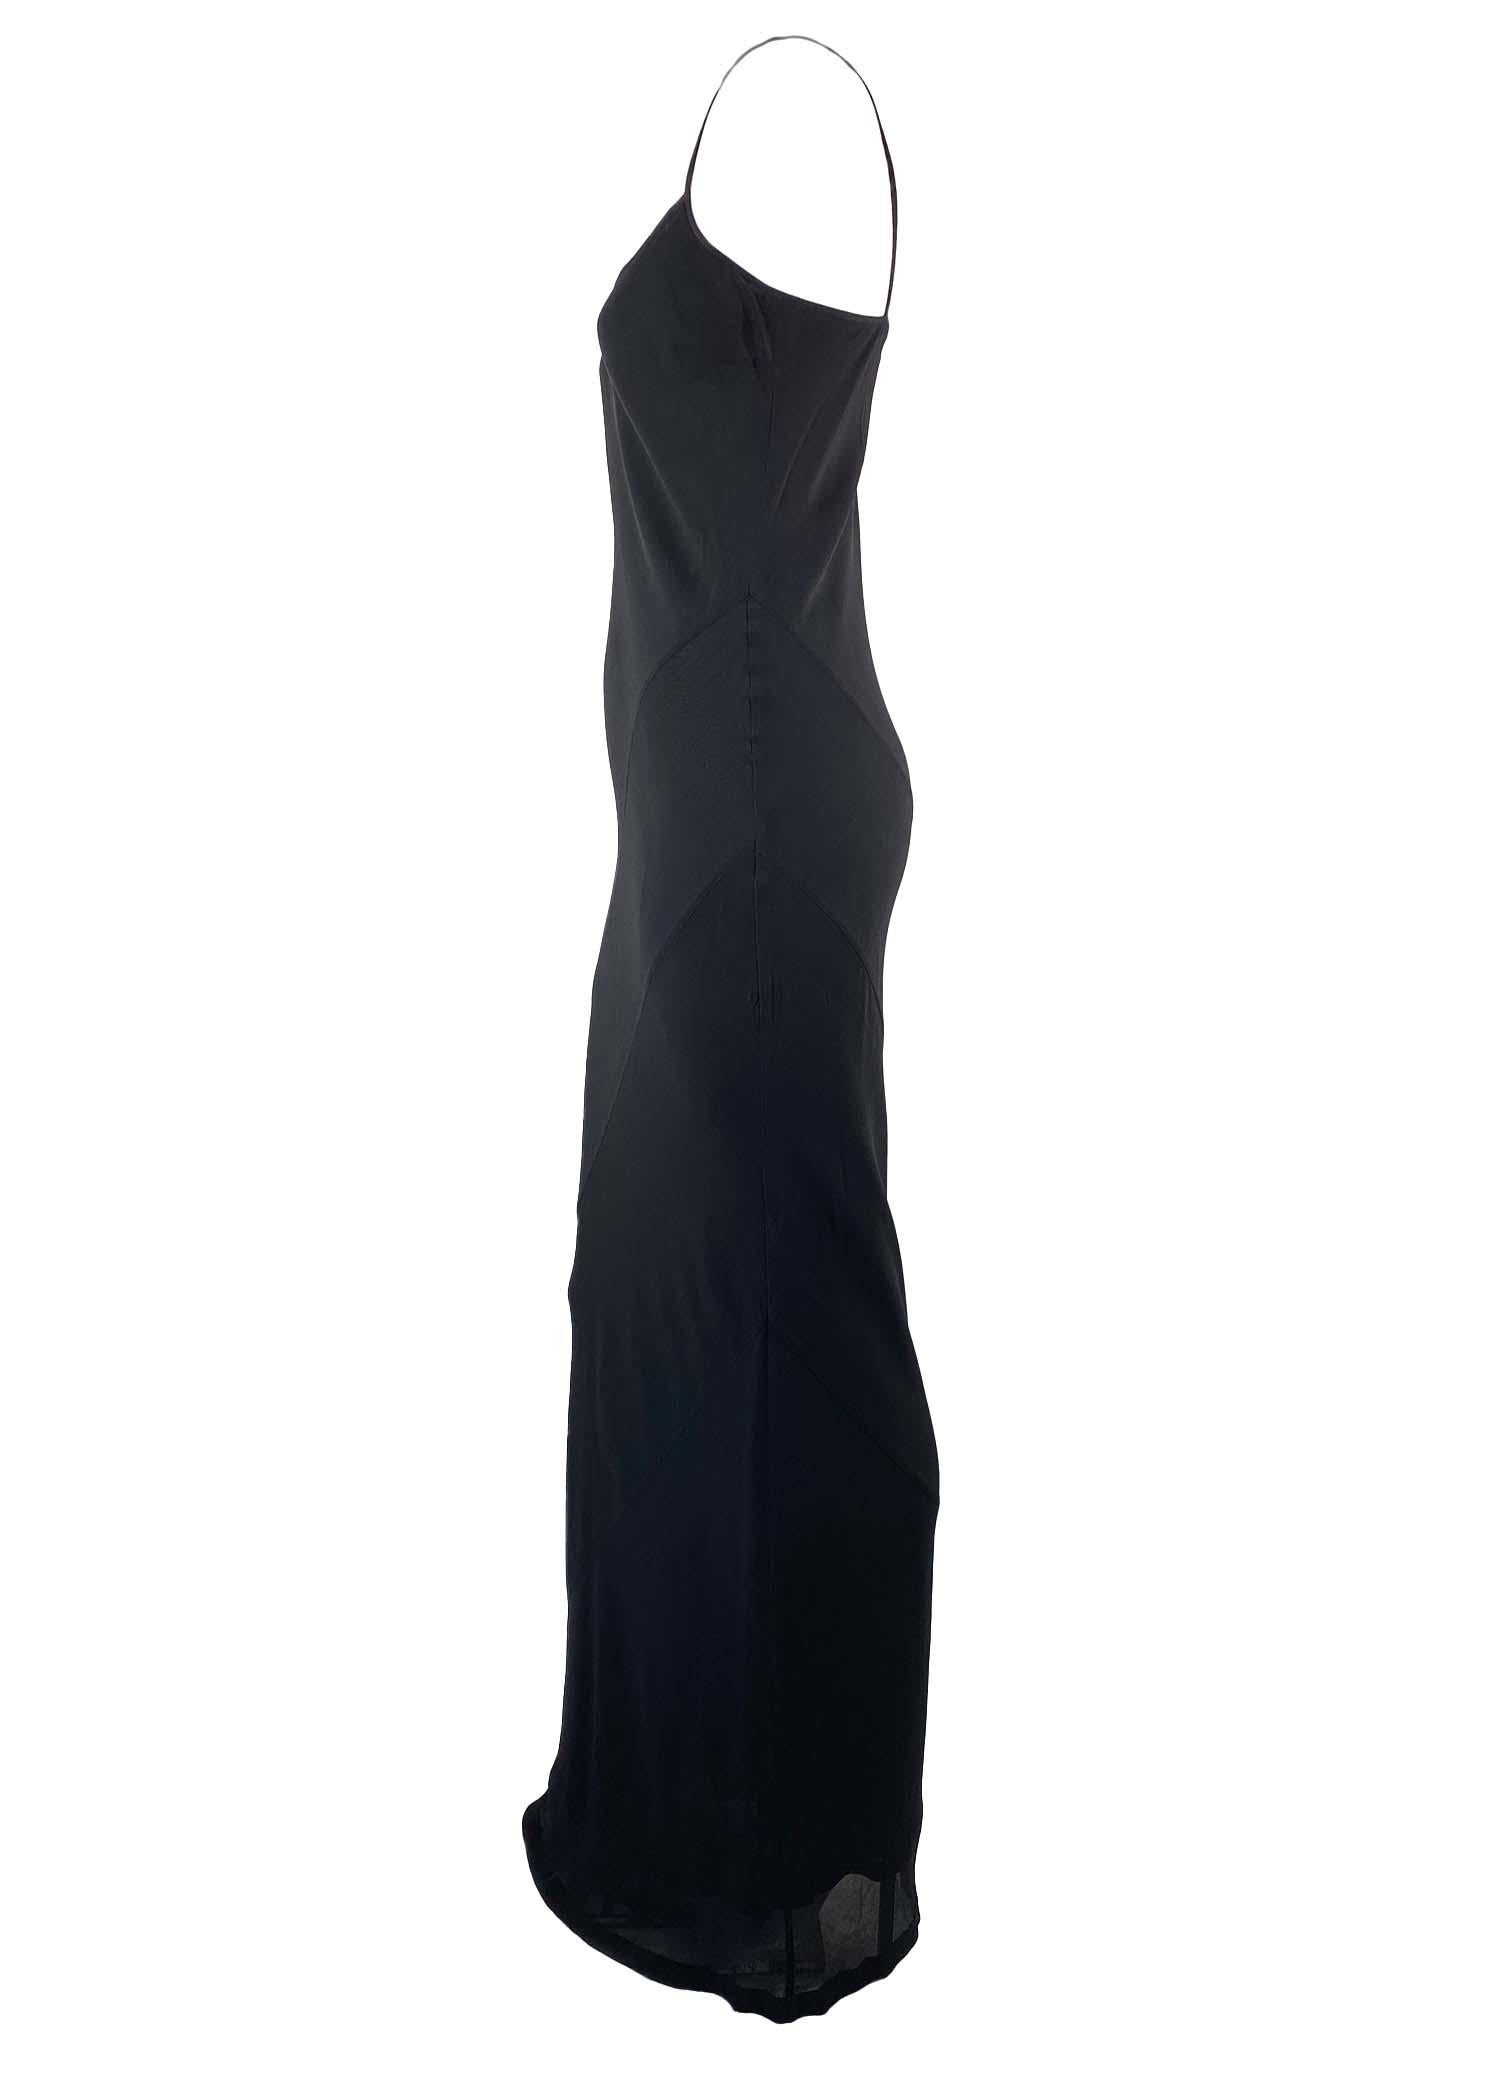 Women's S/S 1997 Gucci by Tom Ford Black Diagonal Cut Sheer Silk Column Dress Slip For Sale